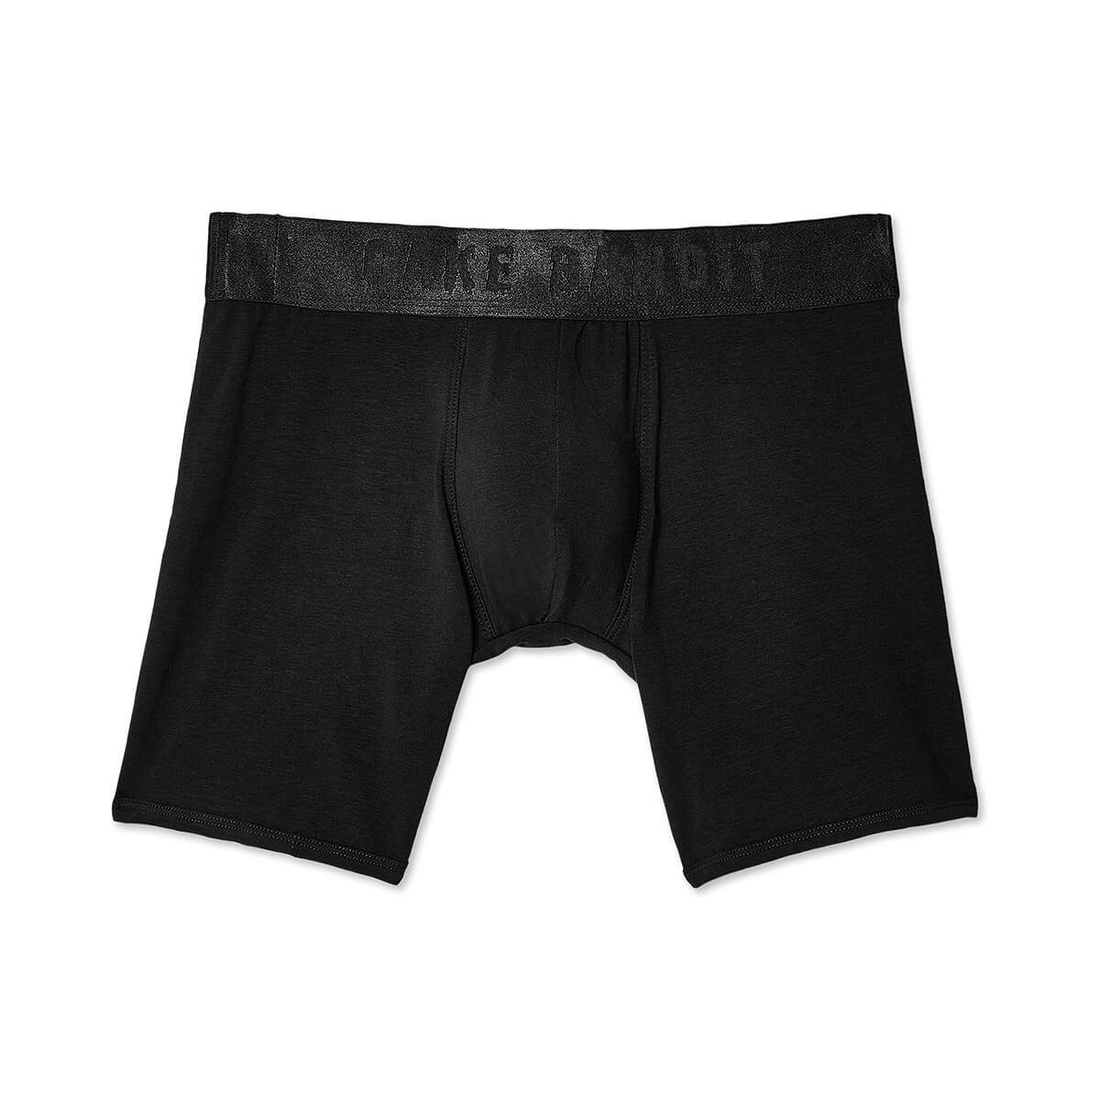 Packing Underwear Boxers, Briefs, Jocks, Swimwear & Harnesses – TG Supply